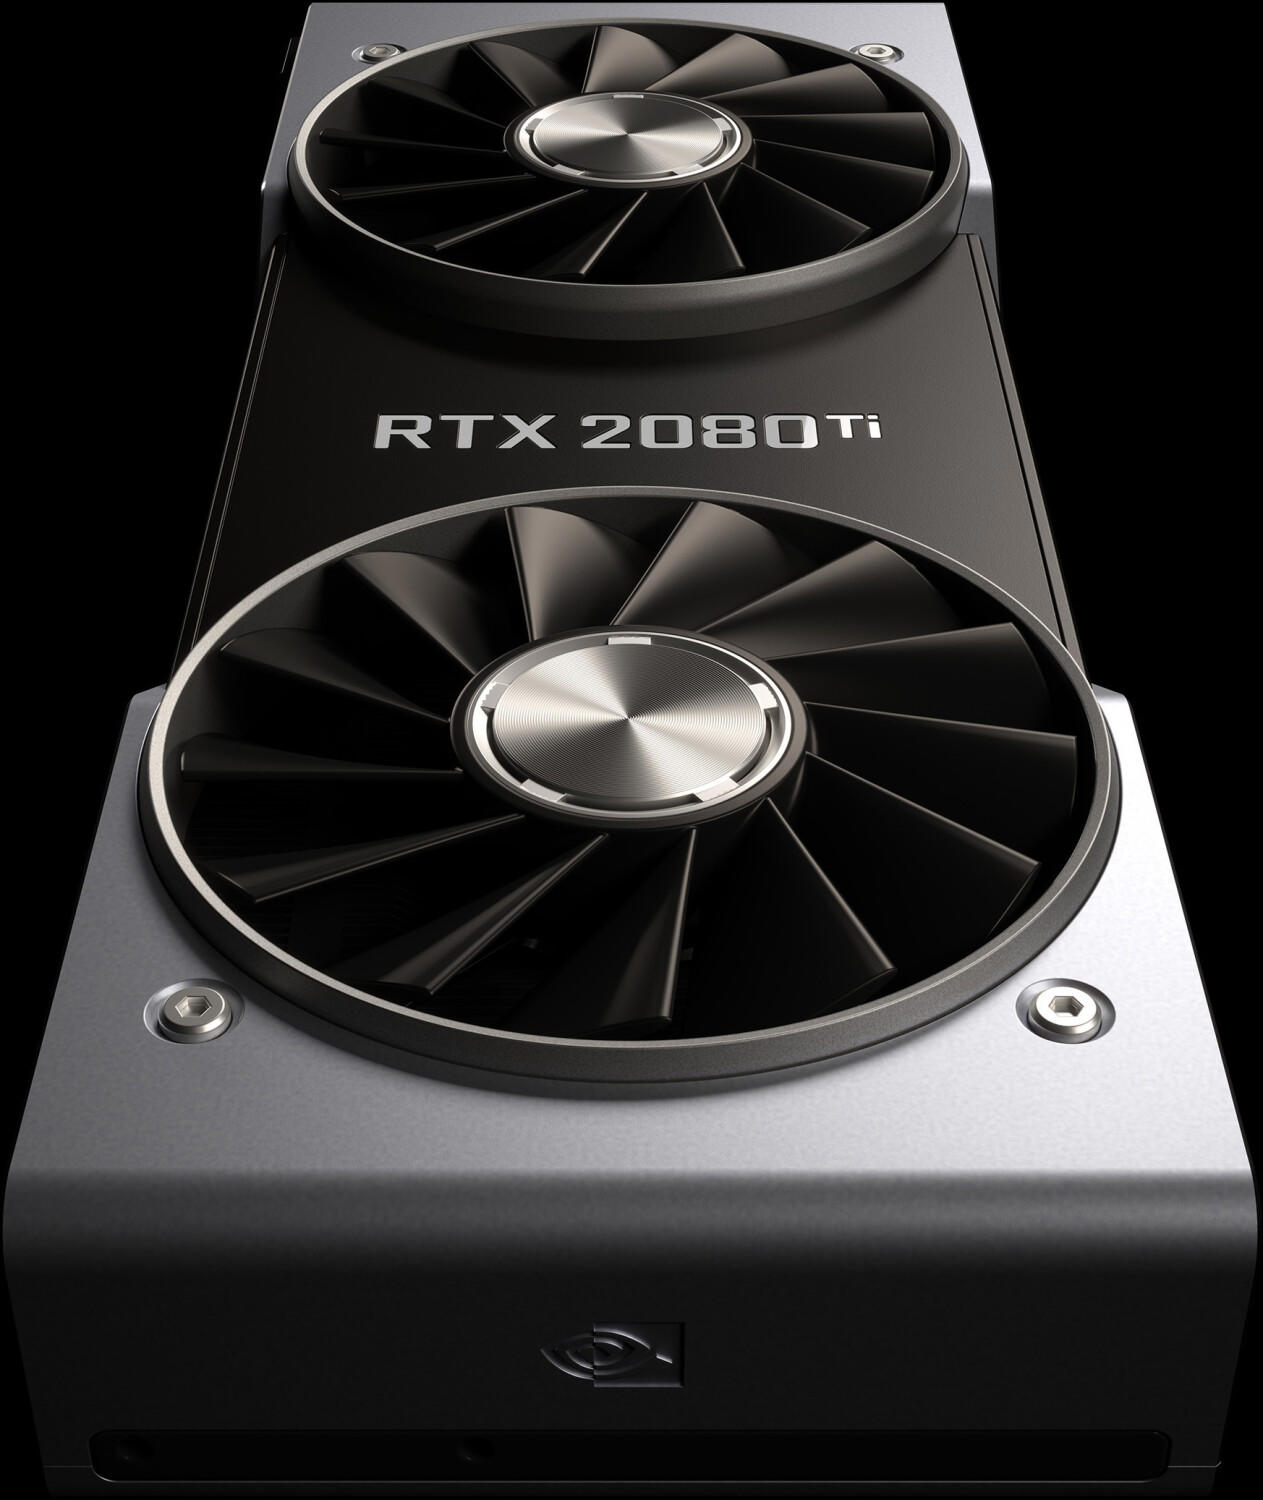 NVIDIA GeForce RTX 2080 Ti Founders Edition 11GB GDDR6